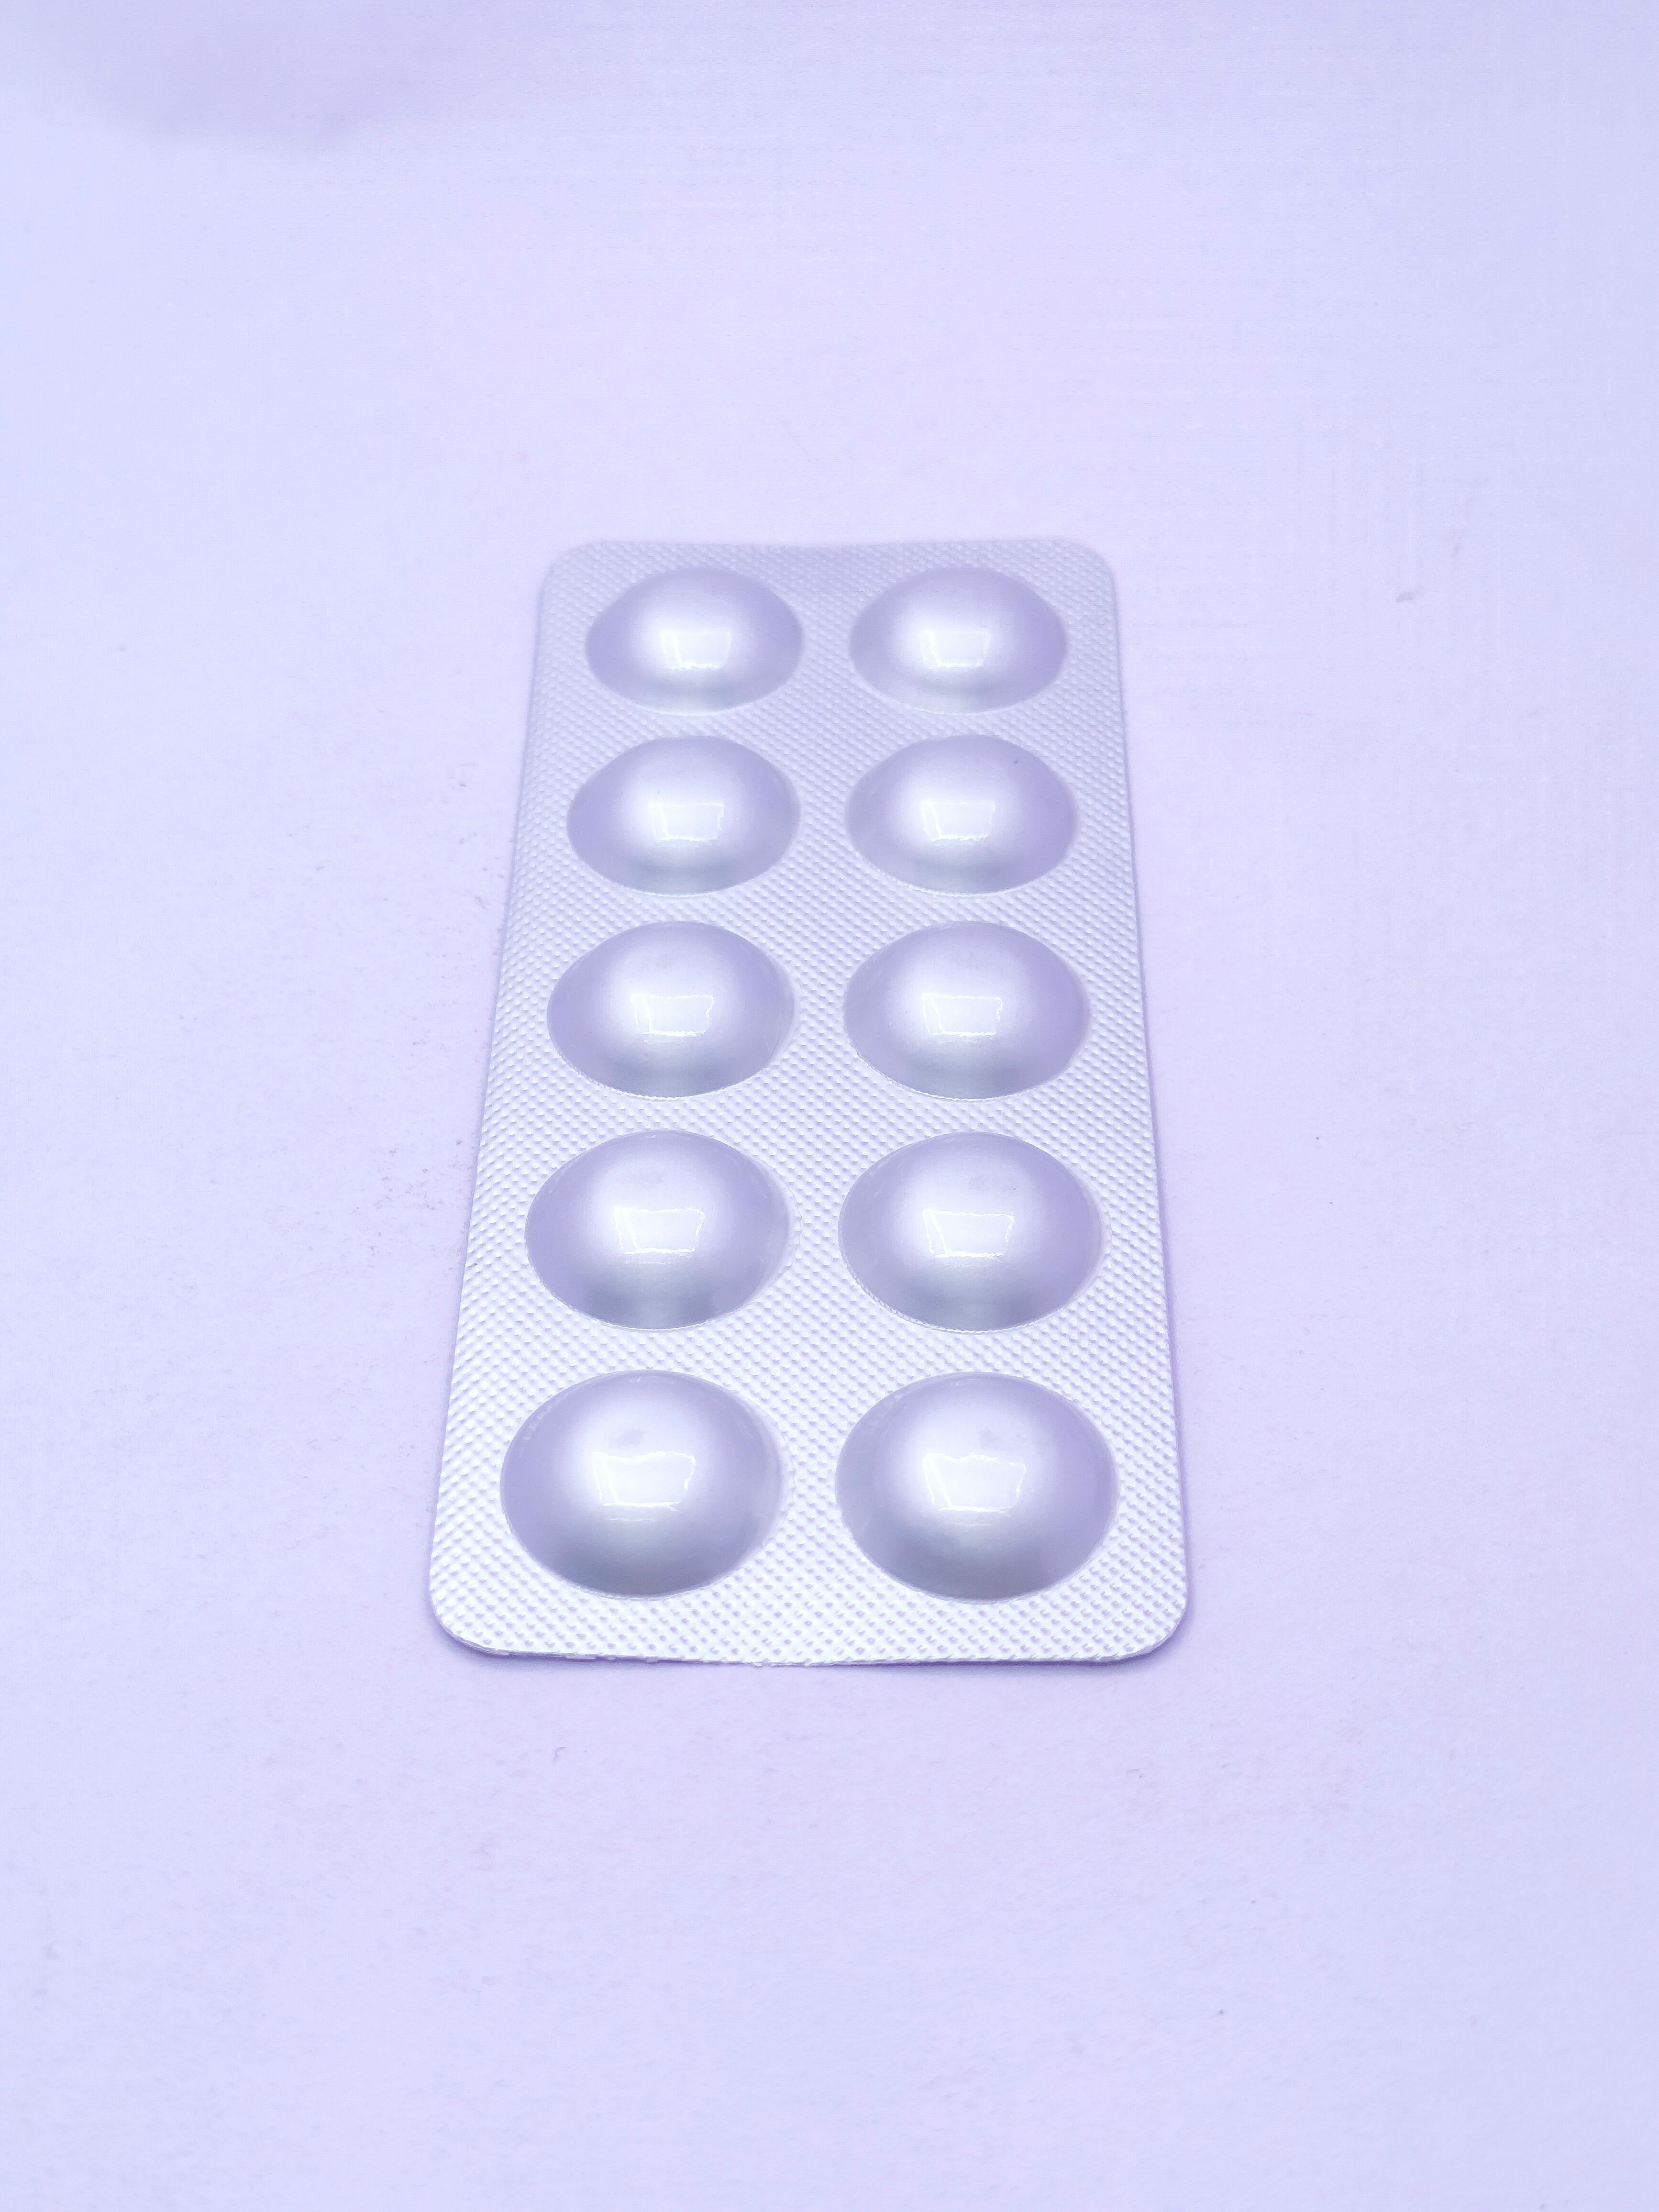 Dapagliflozin tablet